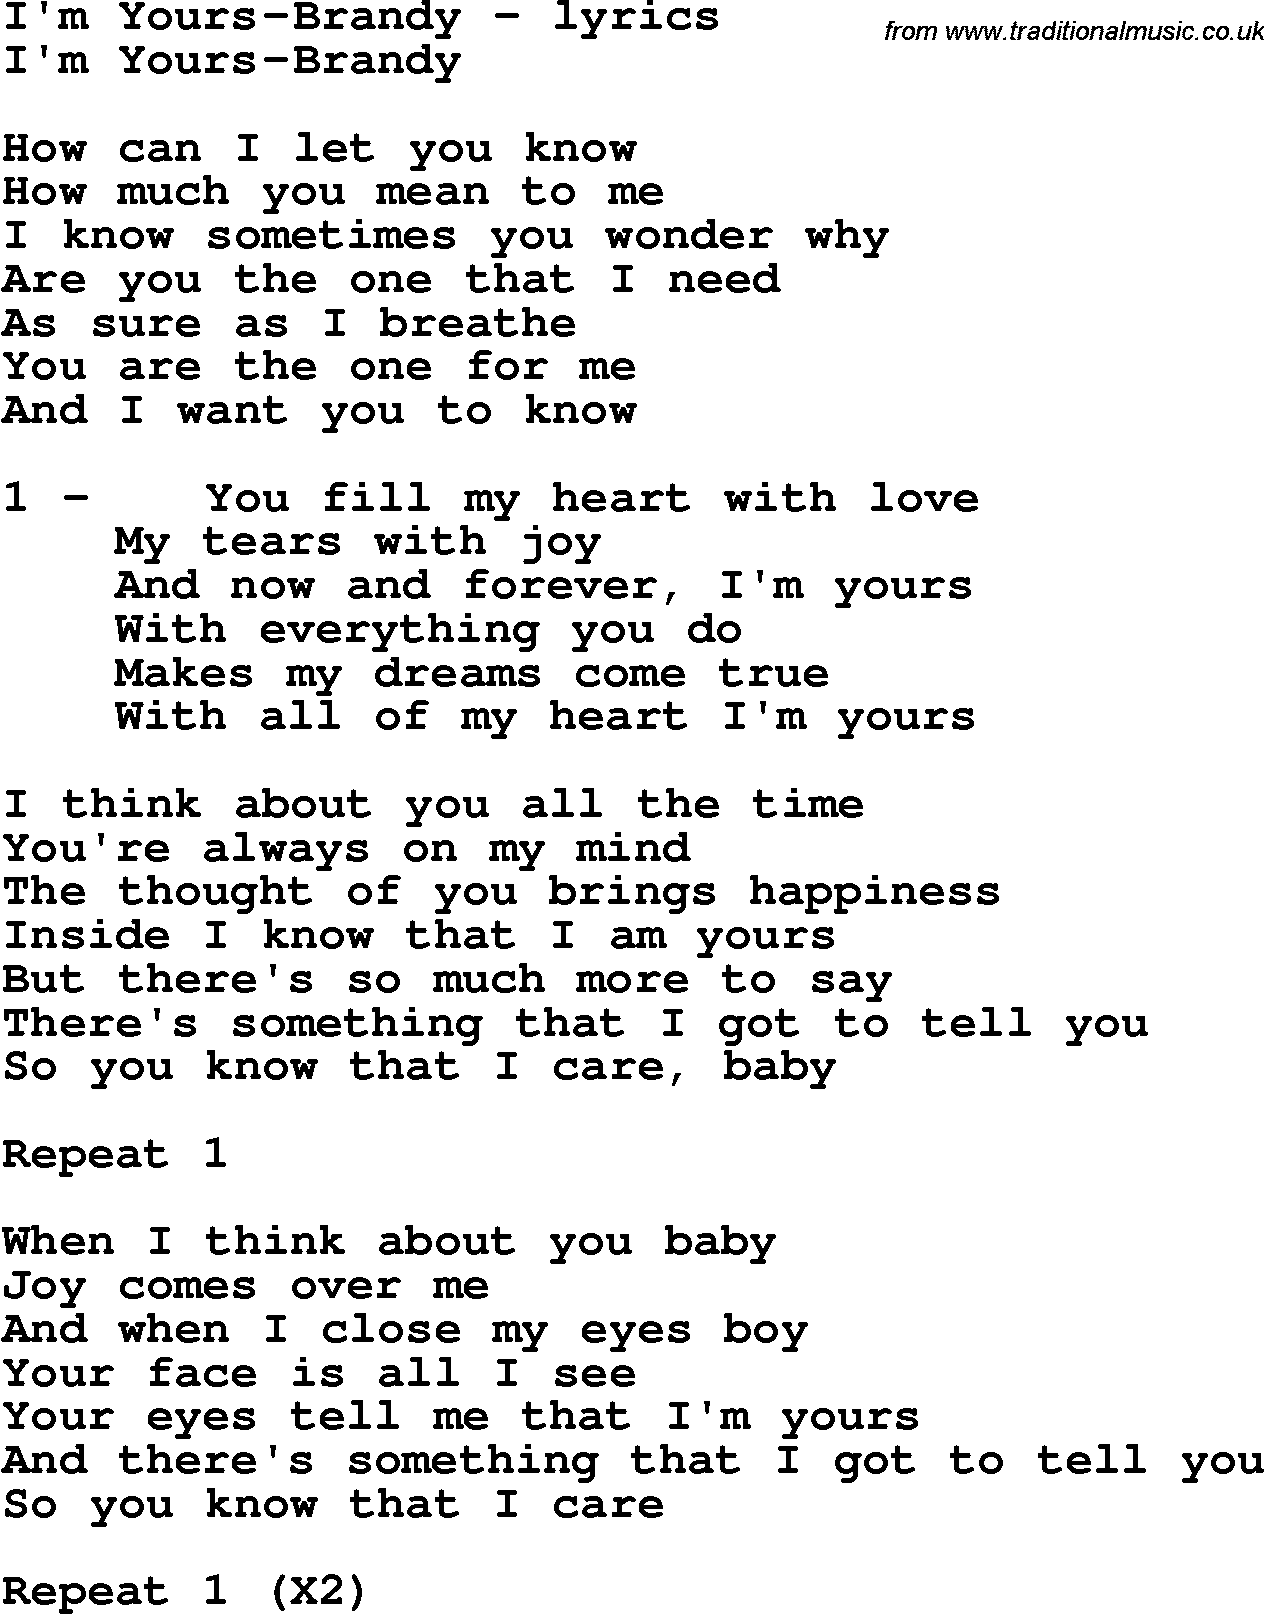 Love Song Lyrics for: I'm Yours-Brandy